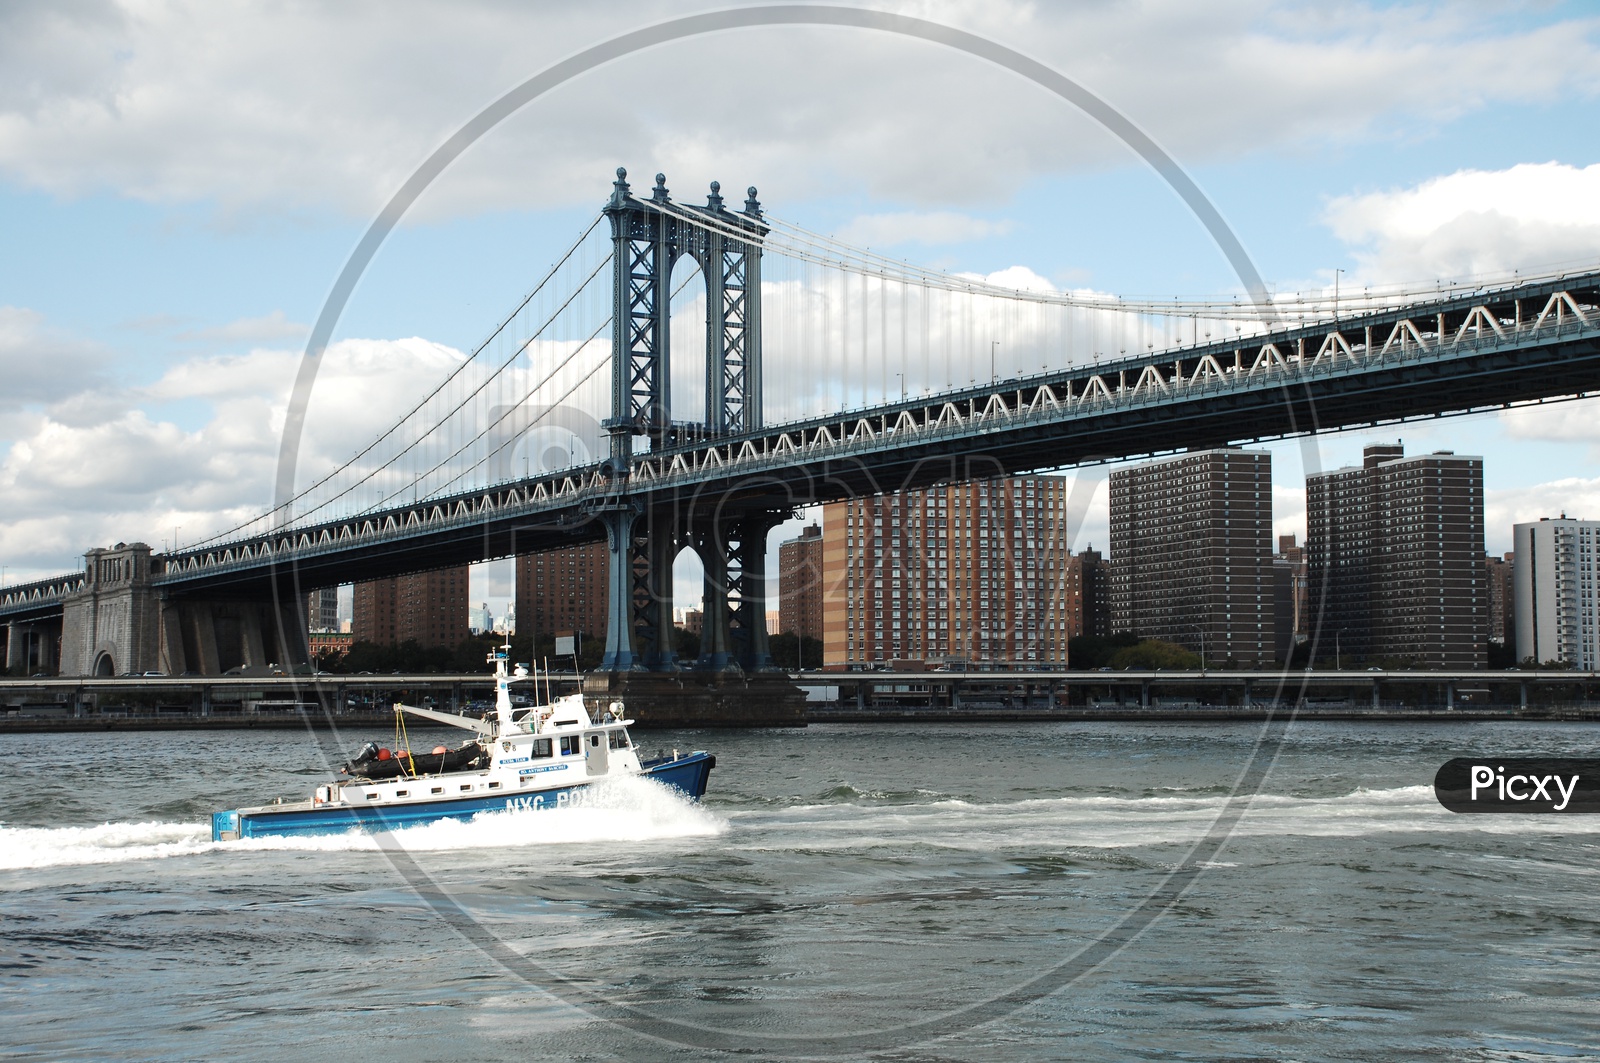 NYC Police patrol boat in the East river near Manhattan bridge